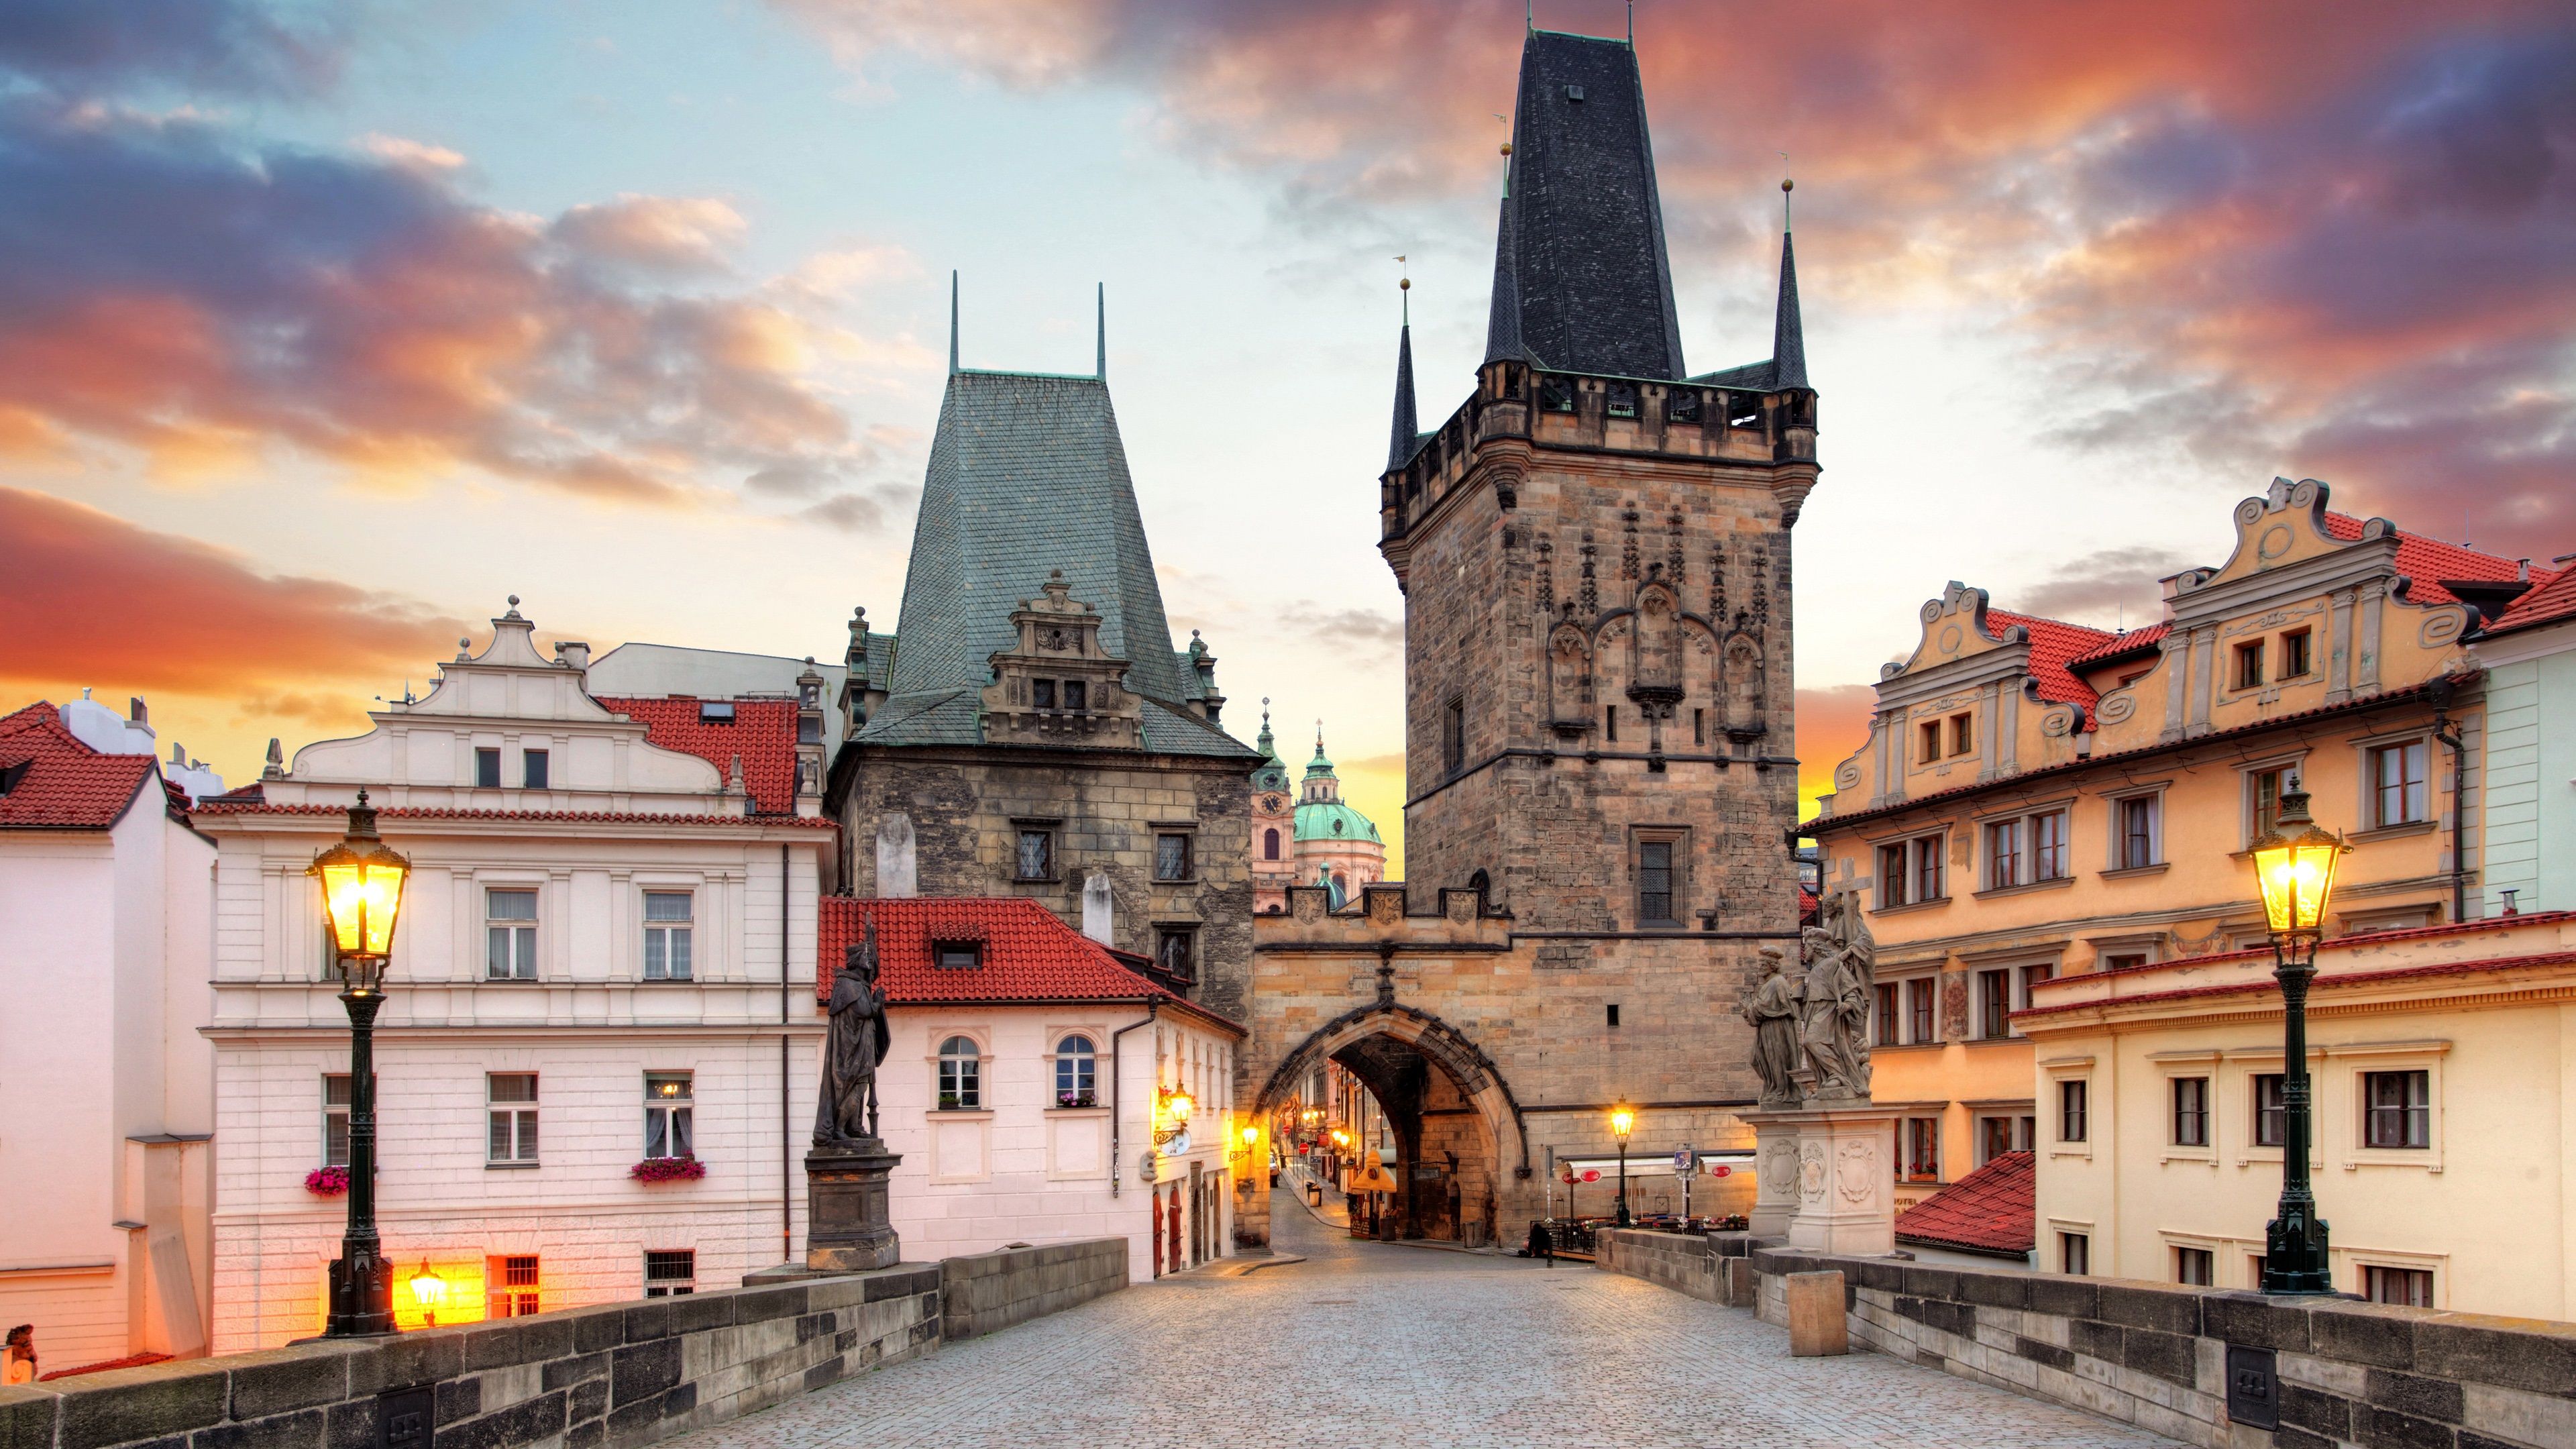 Wallpaper Czech Republic, Prague, Charles Bridge, statues, arch, tower 3840x2160 UHD 4K Picture, Image